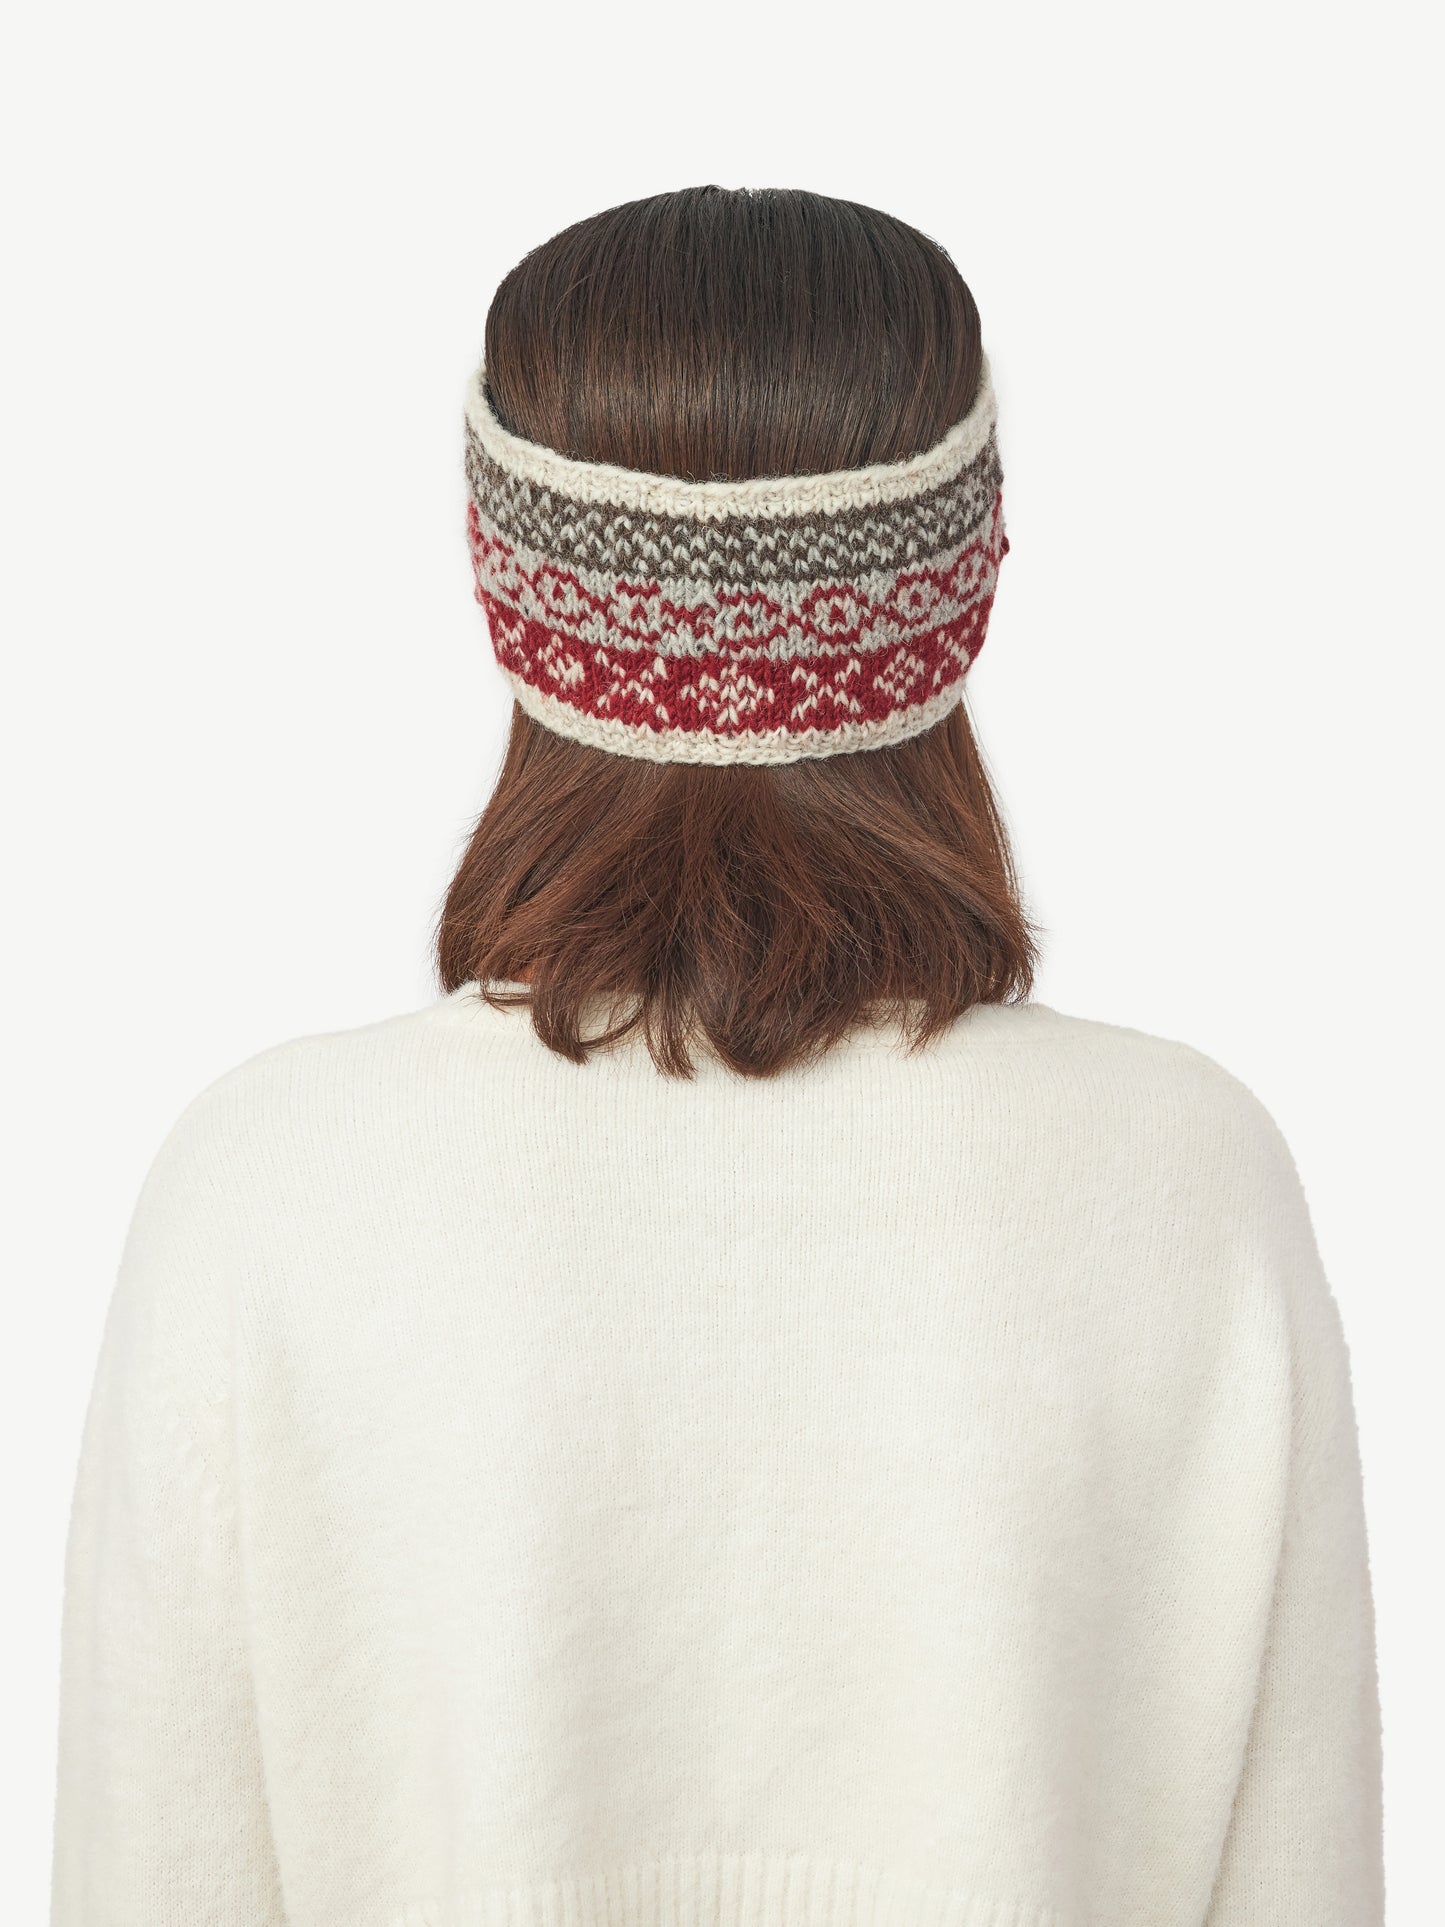 Christmassy Woolen Headband